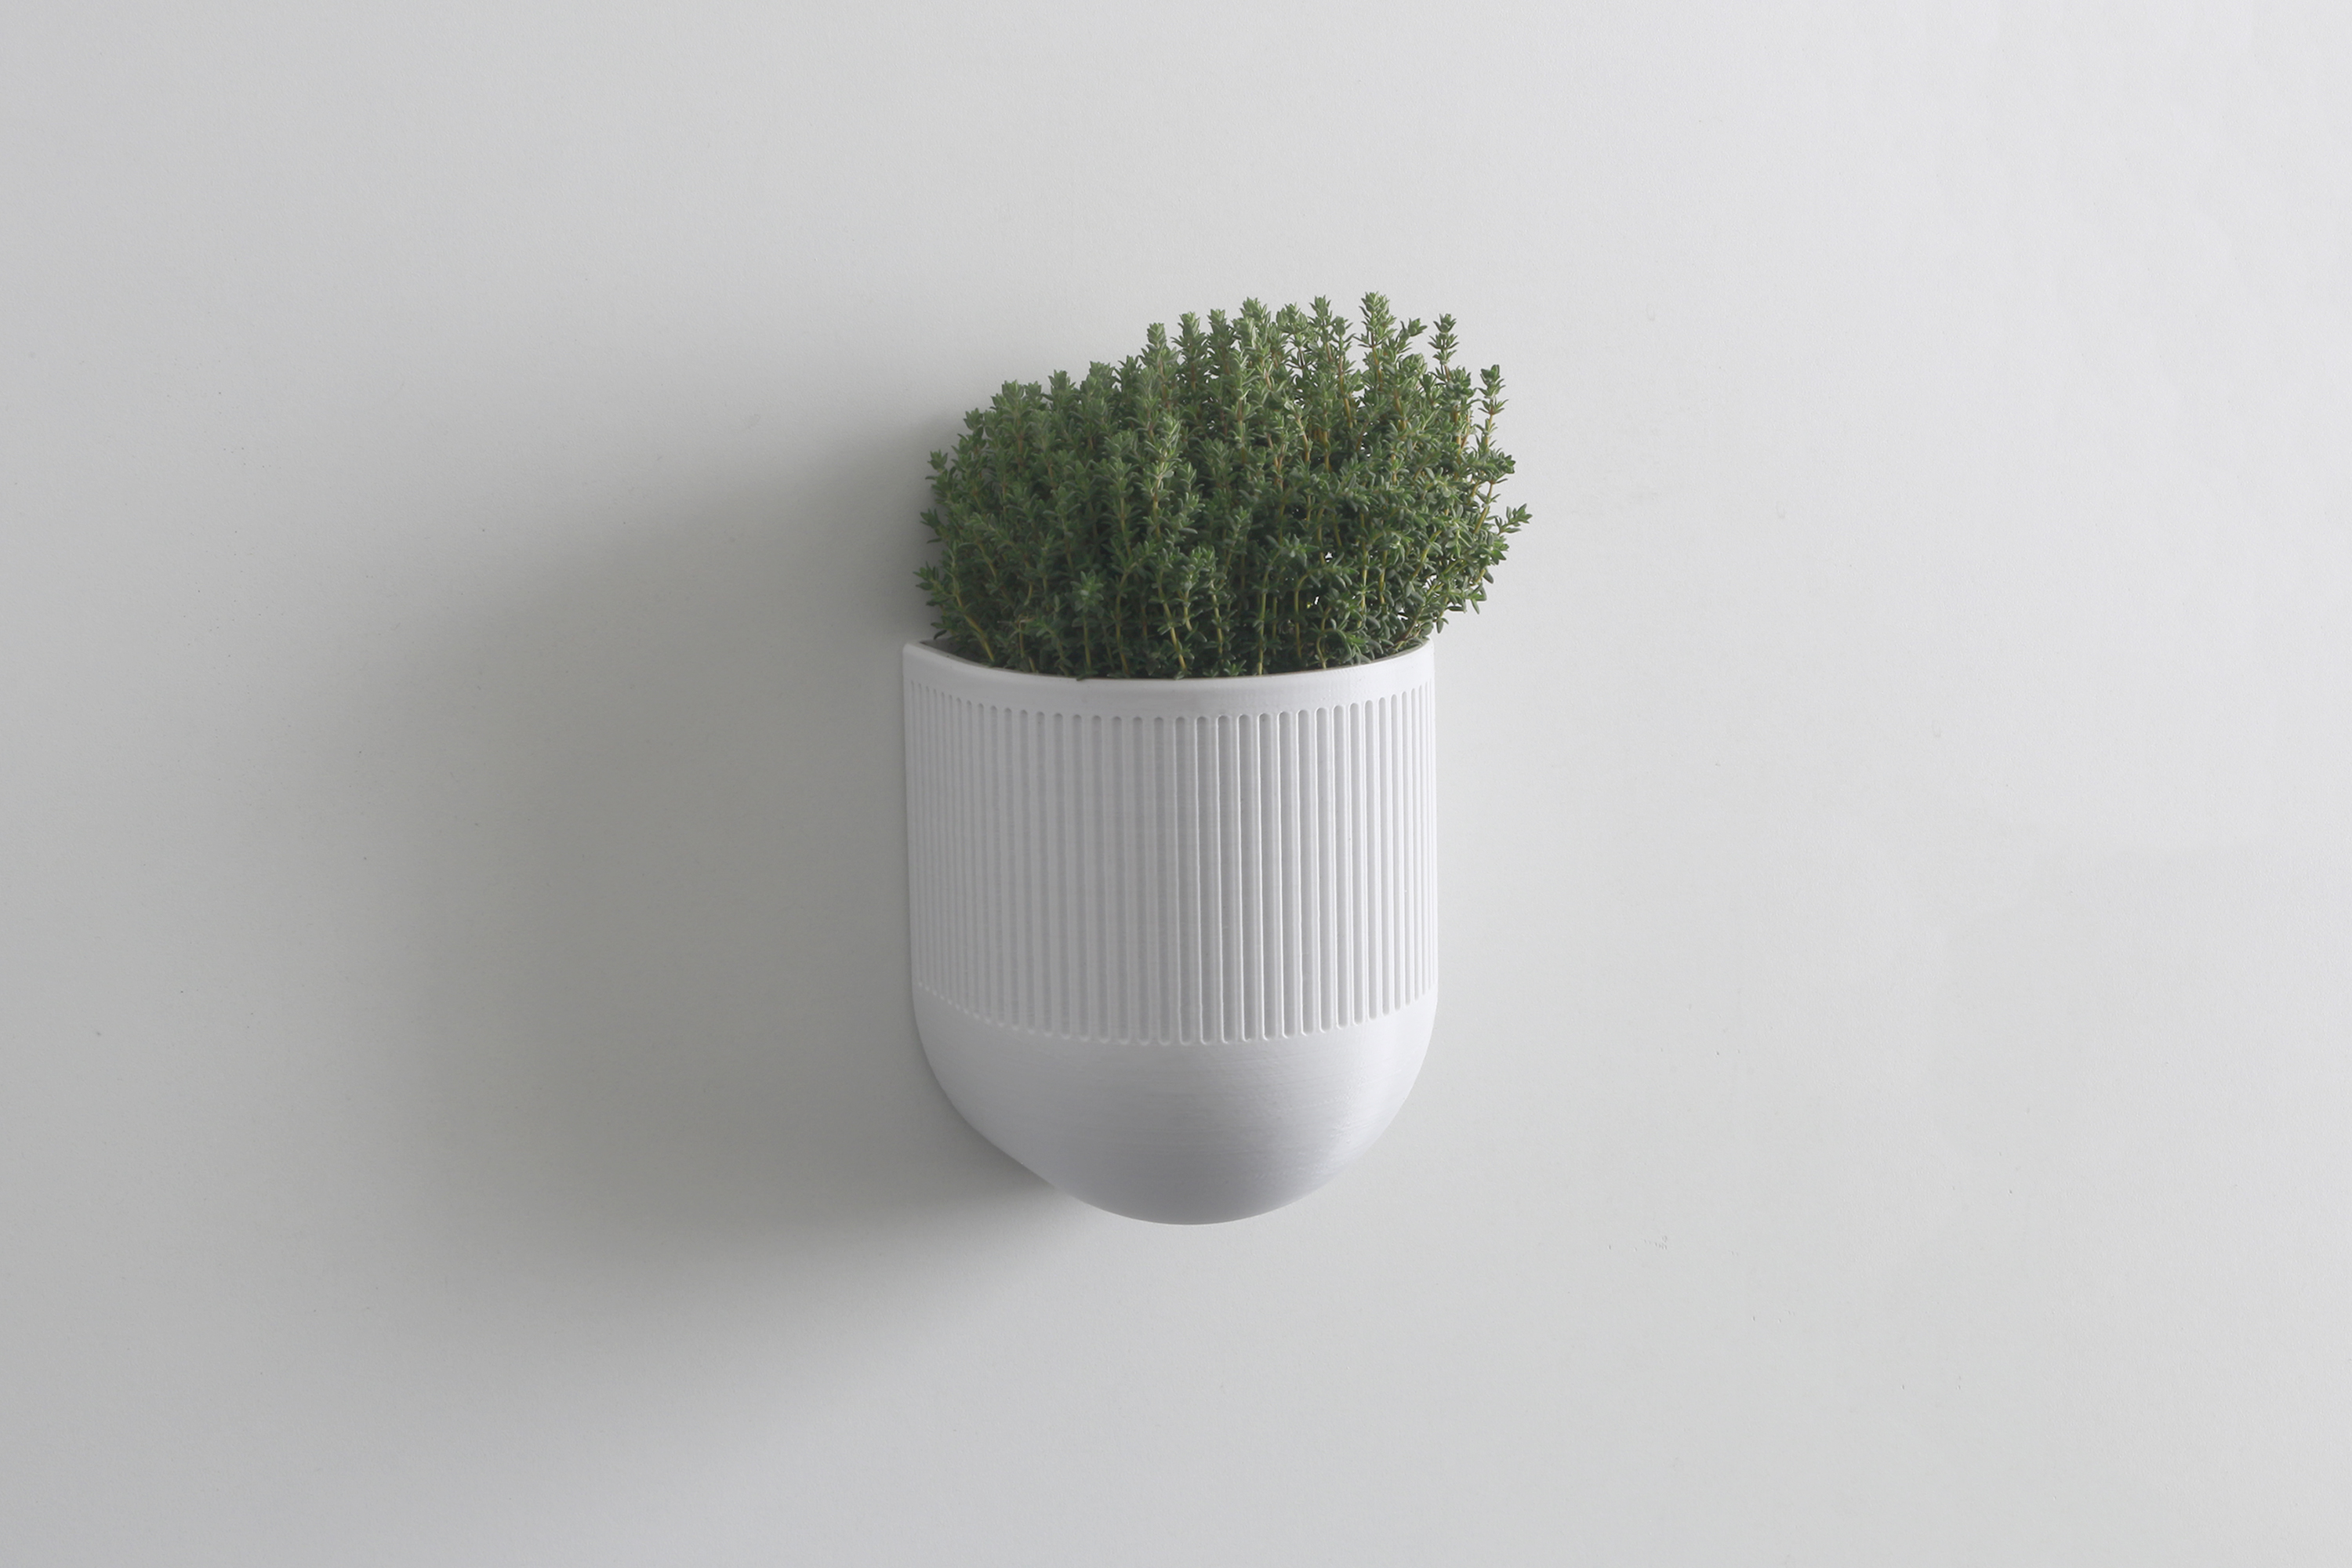 3D printed smart planter